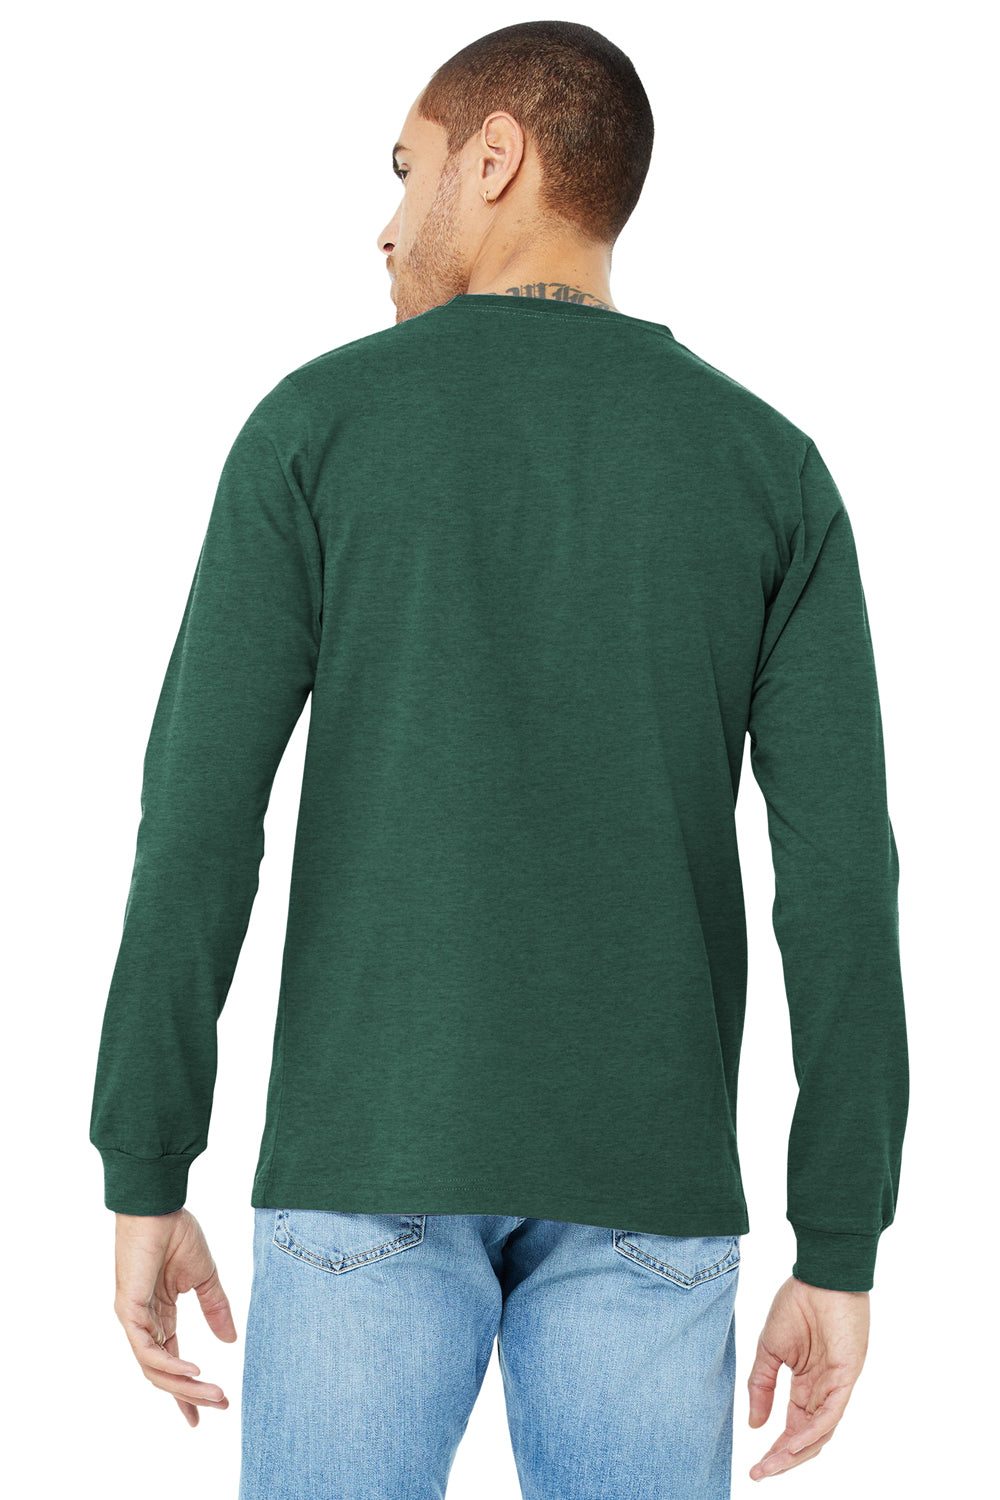 Bella + Canvas BC3501CVC Mens CVC Long Sleeve Crewneck T-Shirt Heather Forest Green Model Back